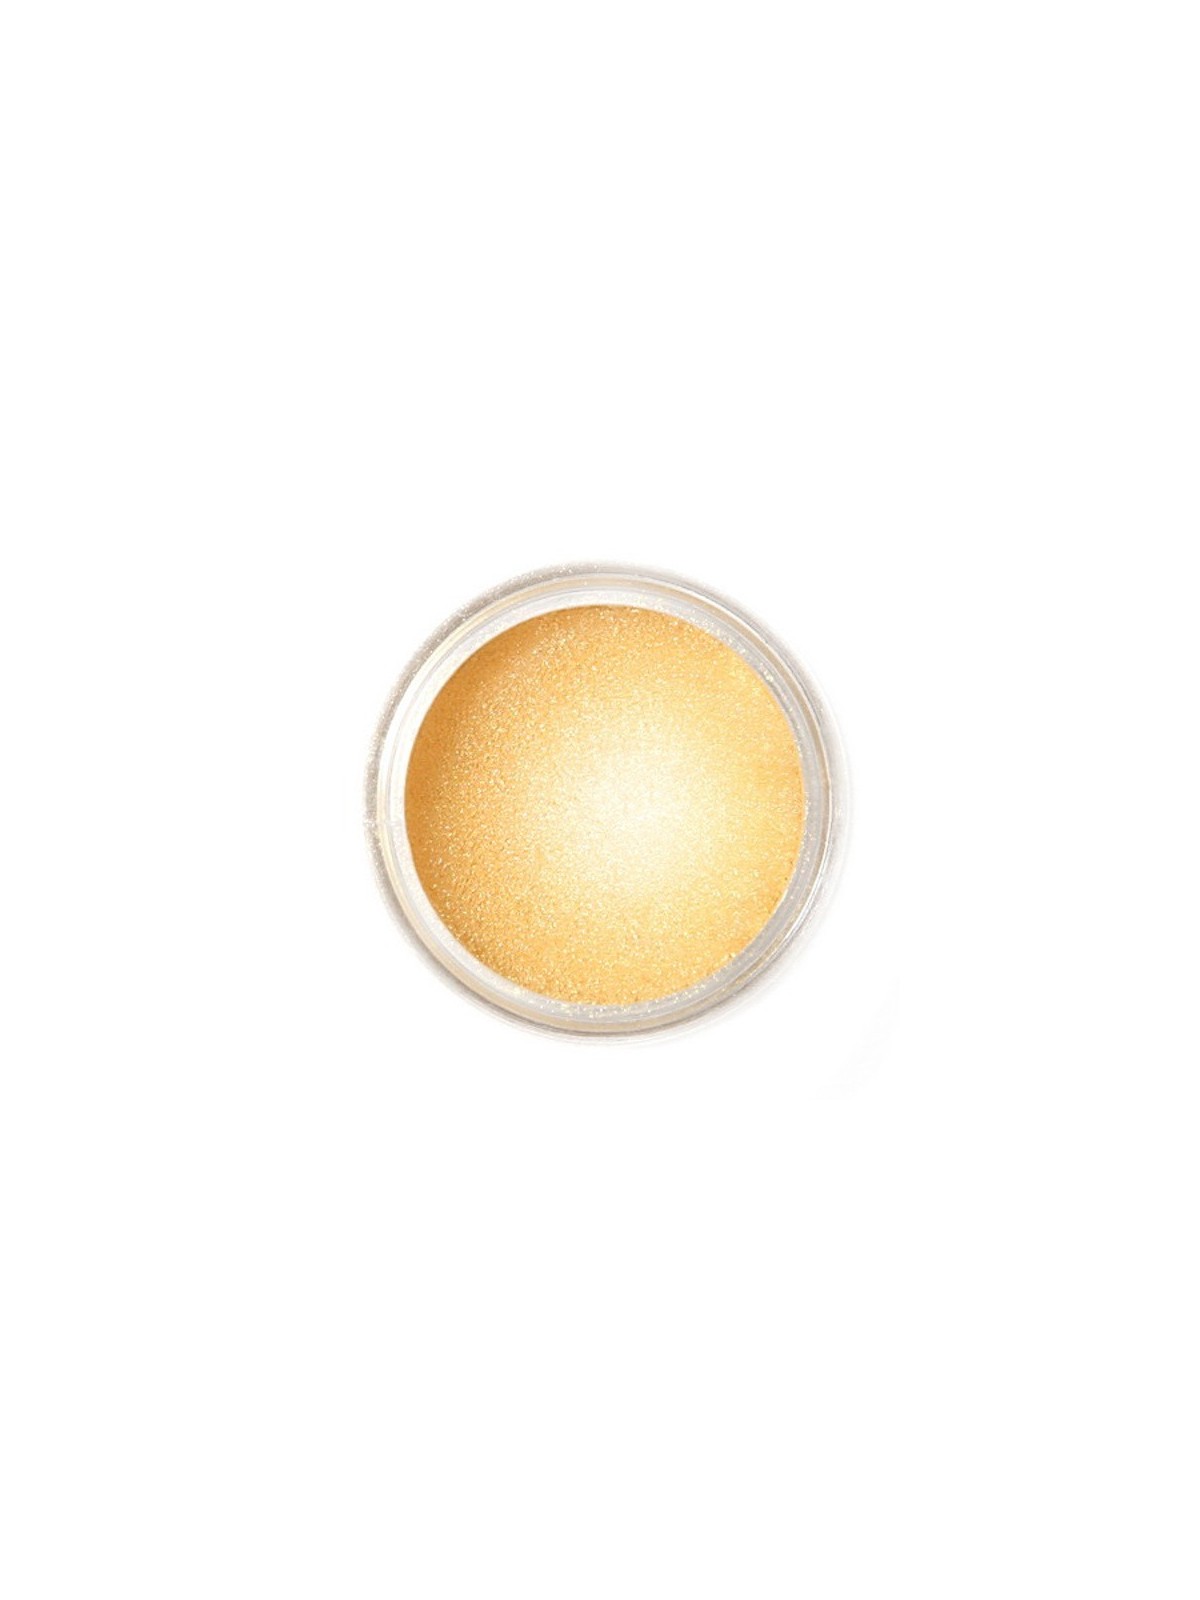 Dekorativ Perle Puderfarbe Fractal - Golden Shine, Arany homok (3,5 g)